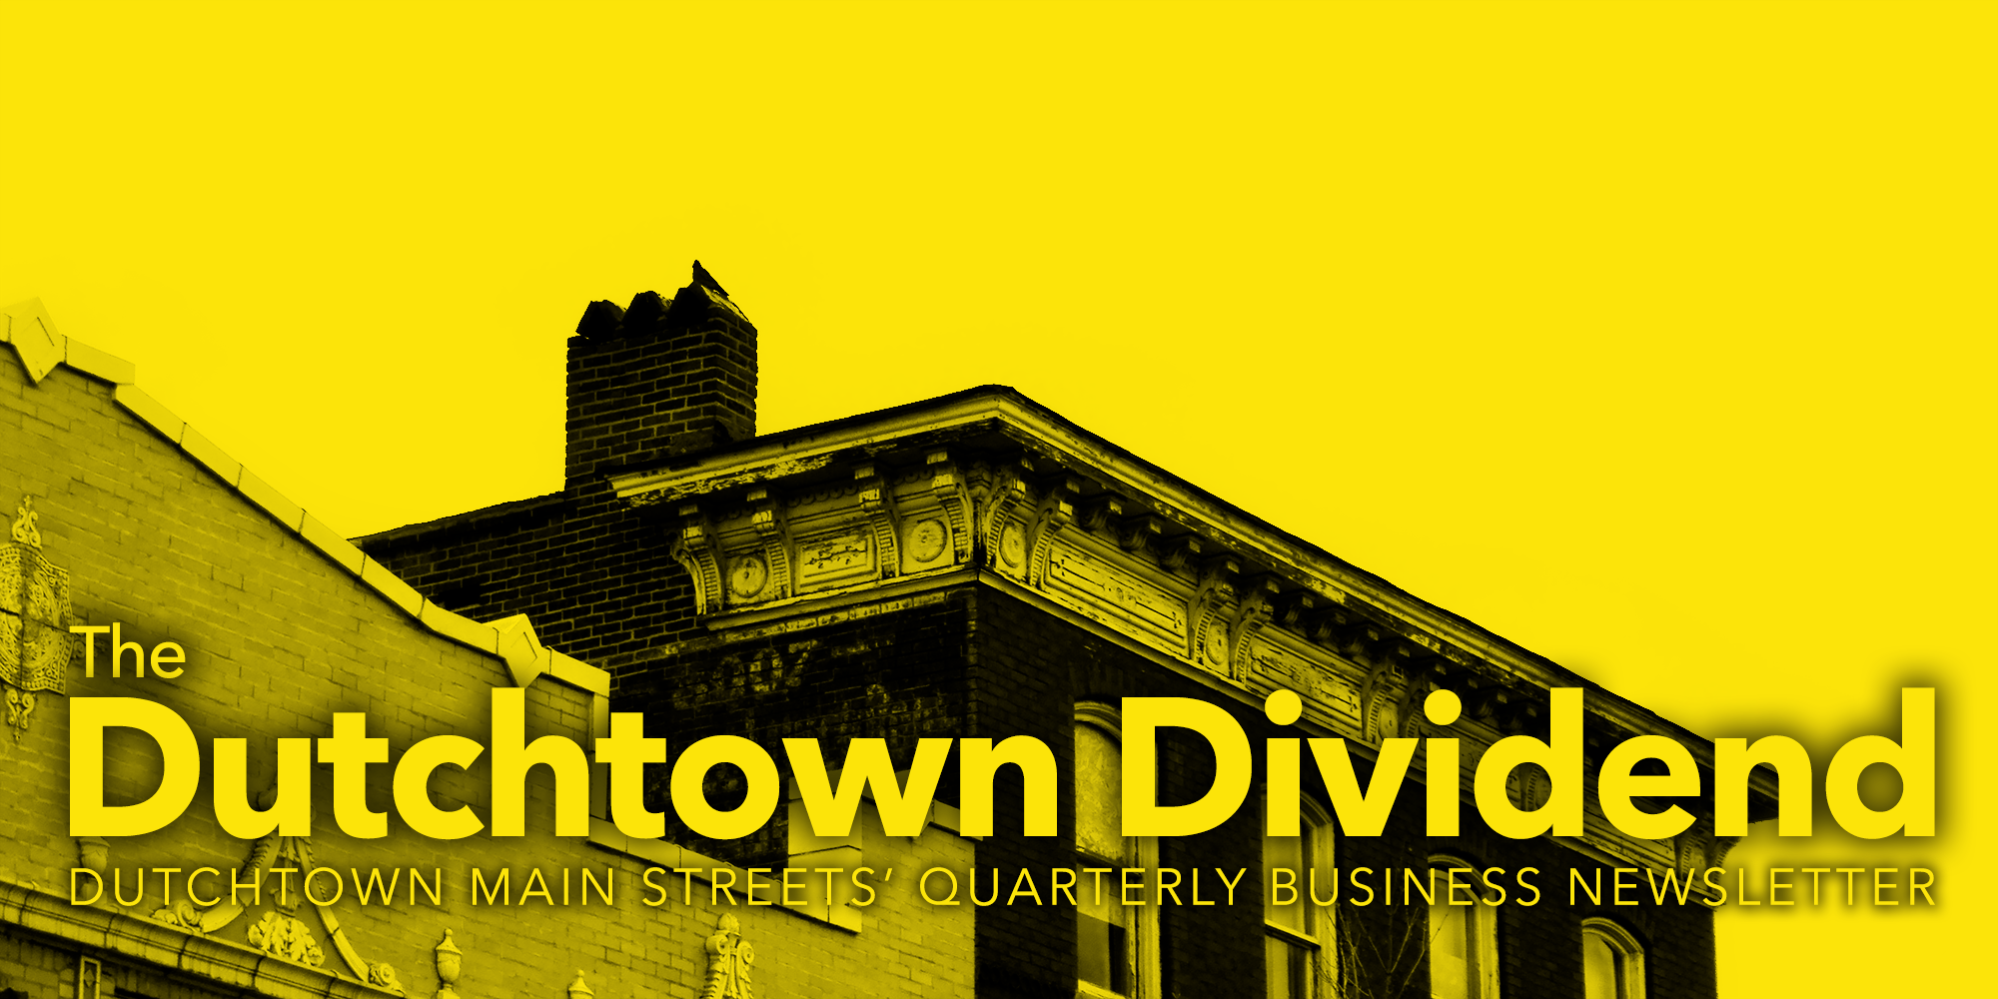 Dutchtown 红利，Dutchtown Main Streets 的季度商业通讯。